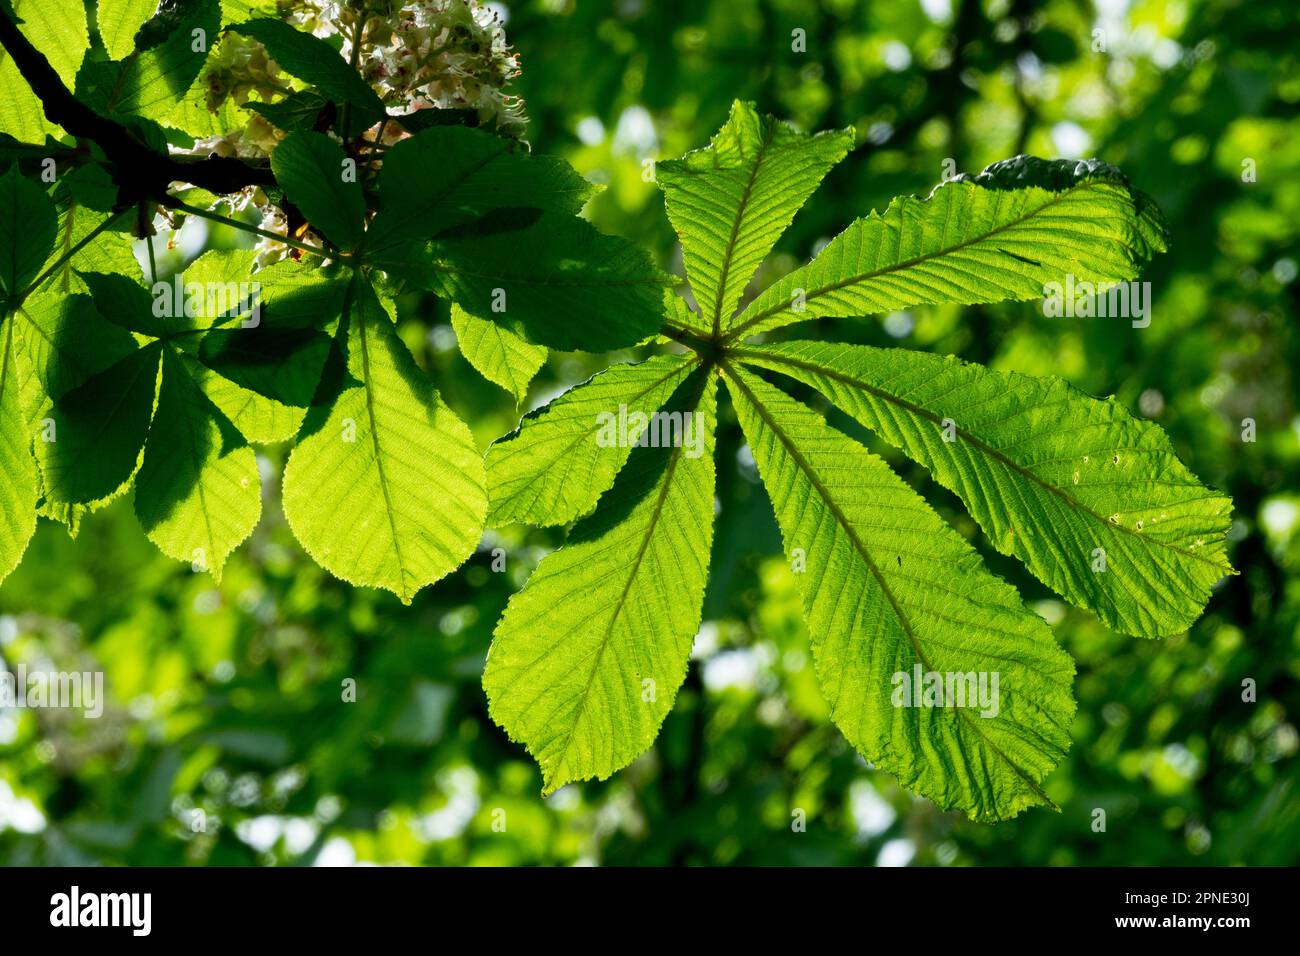 Spring, Green, Horse Chestnut leaf Sunlit Leaves Stock Photo